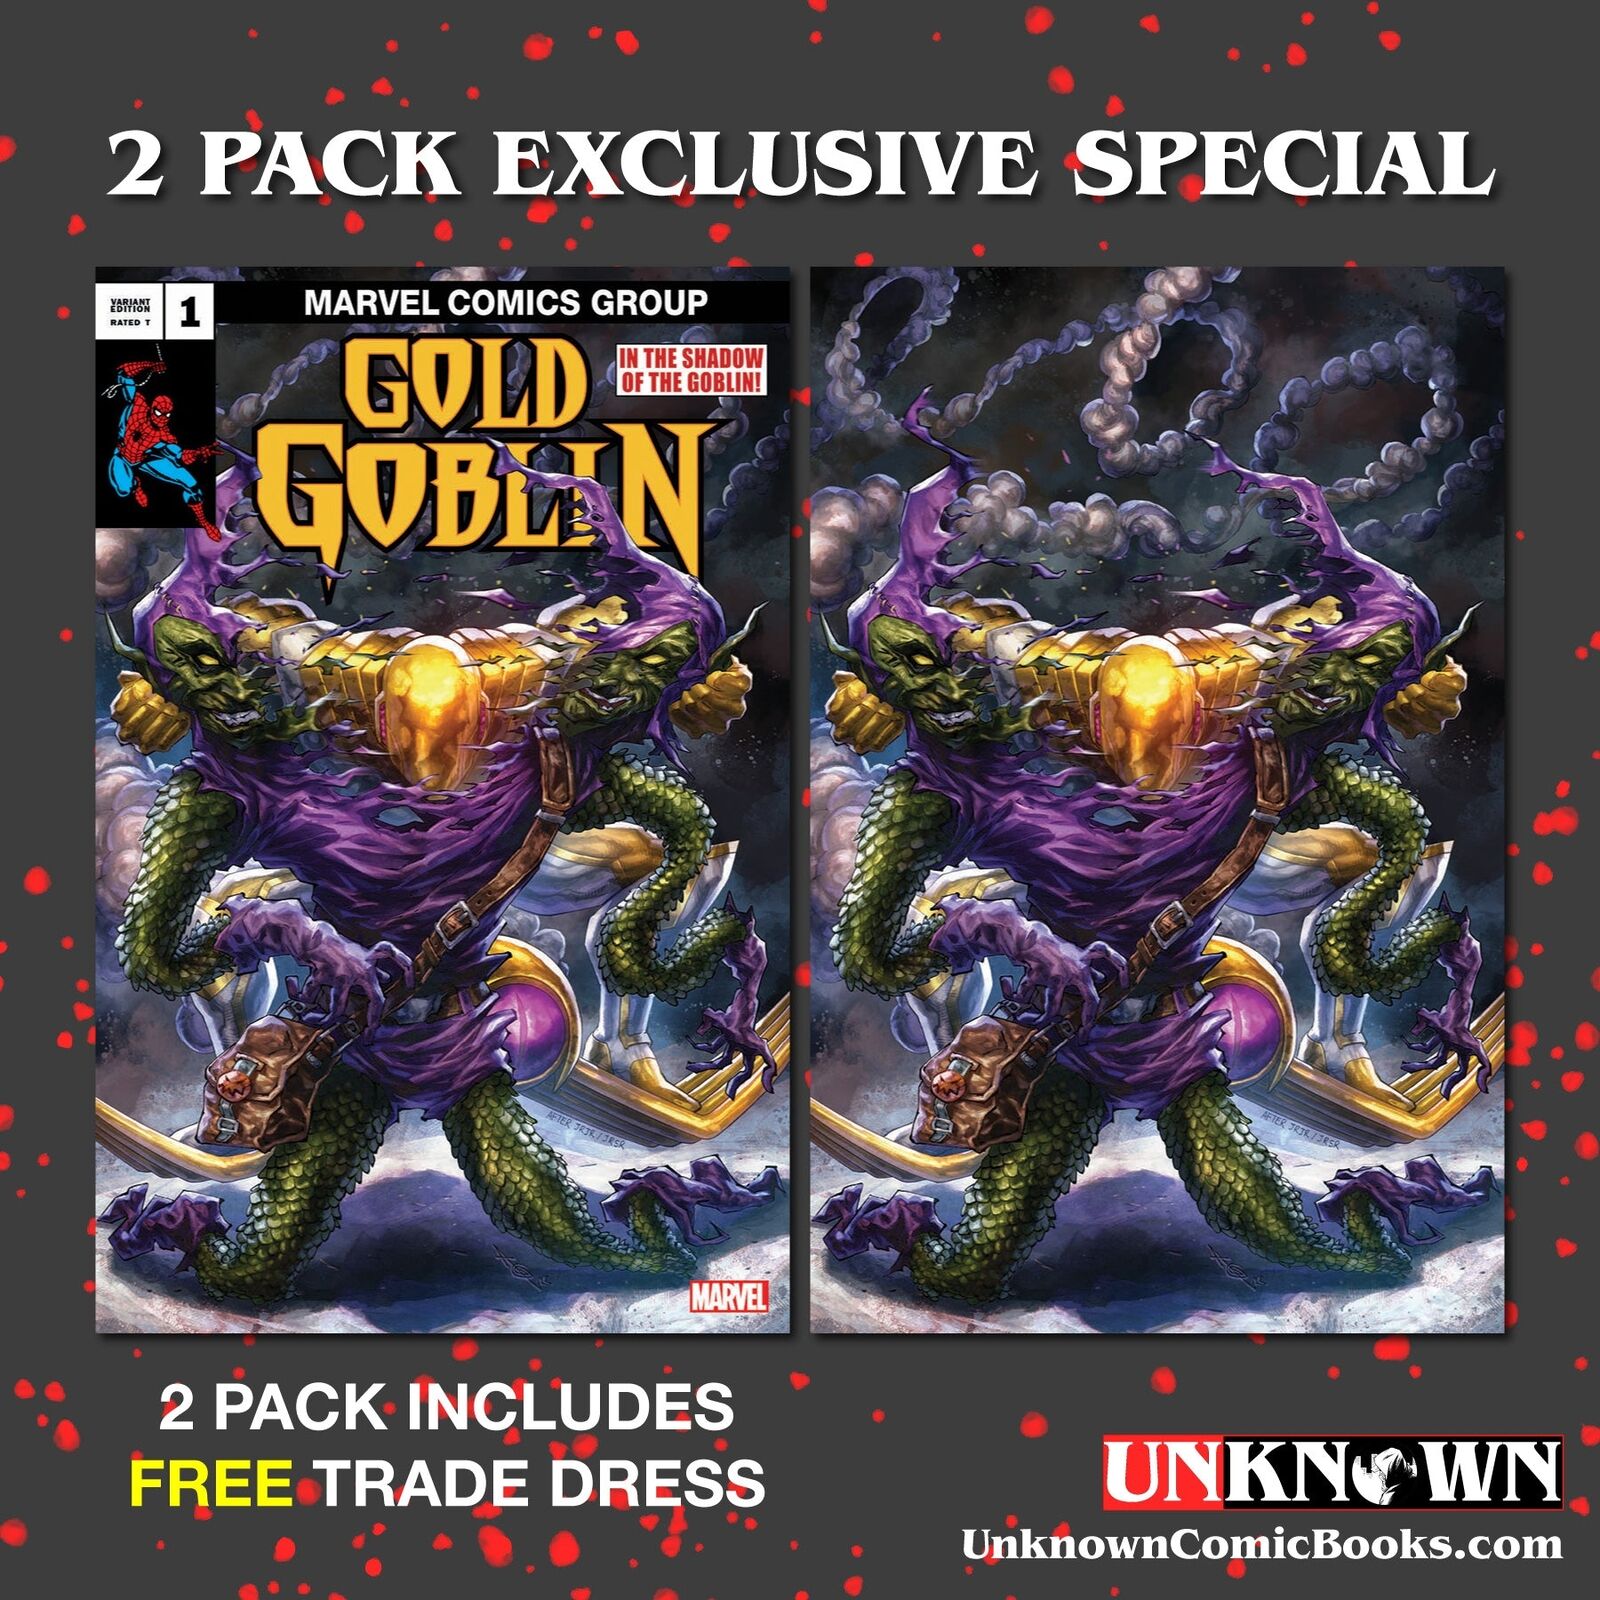 2 PACK **FREE TRADE DRESS** GOLD GOBLIN #1 UNKNOWN COMICS ALAN QUAH EXCLUSIVE VA